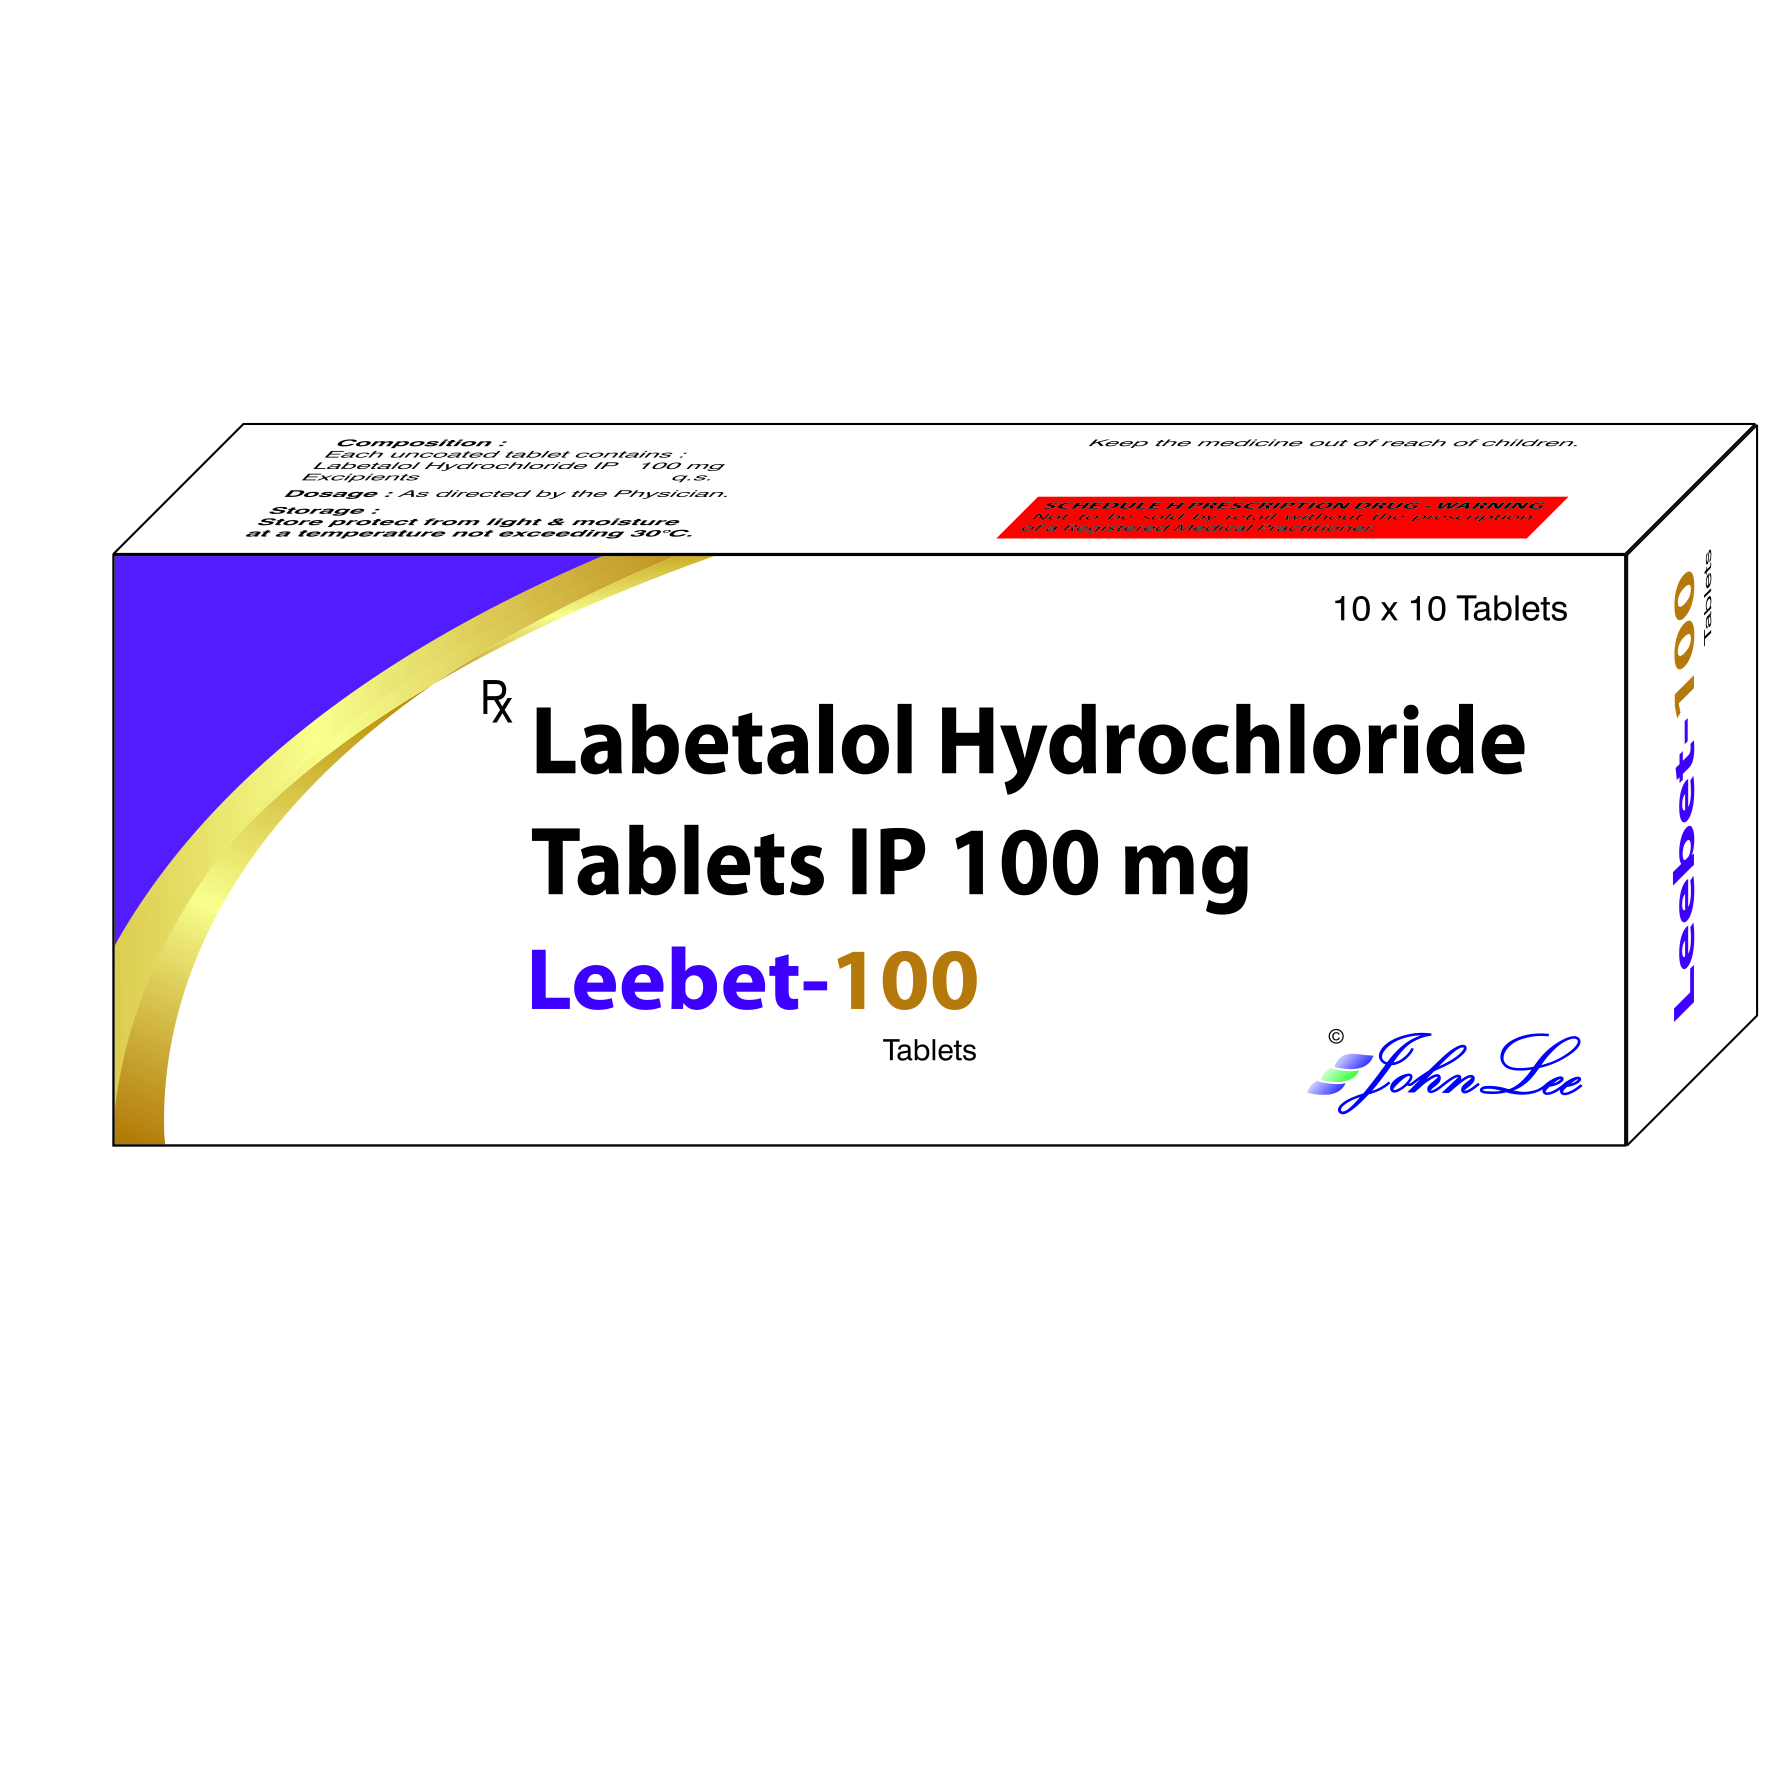 Labetalol Tablet IP